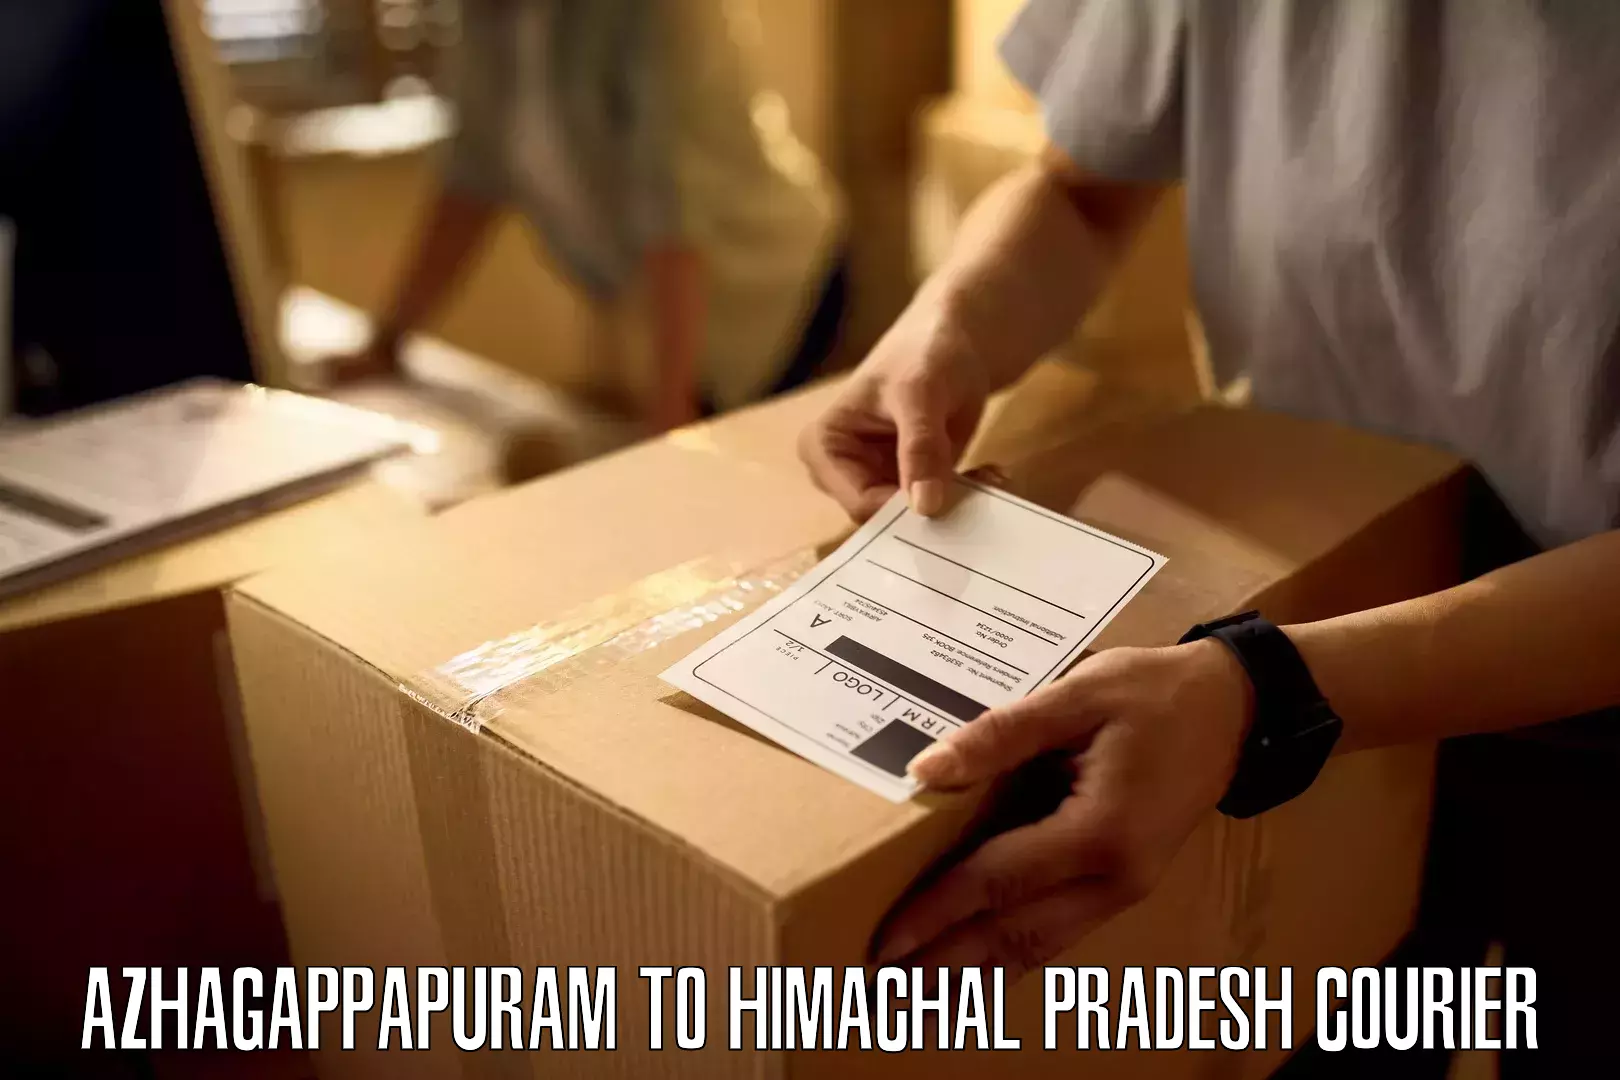 Courier service partnerships Azhagappapuram to Himachal Pradesh